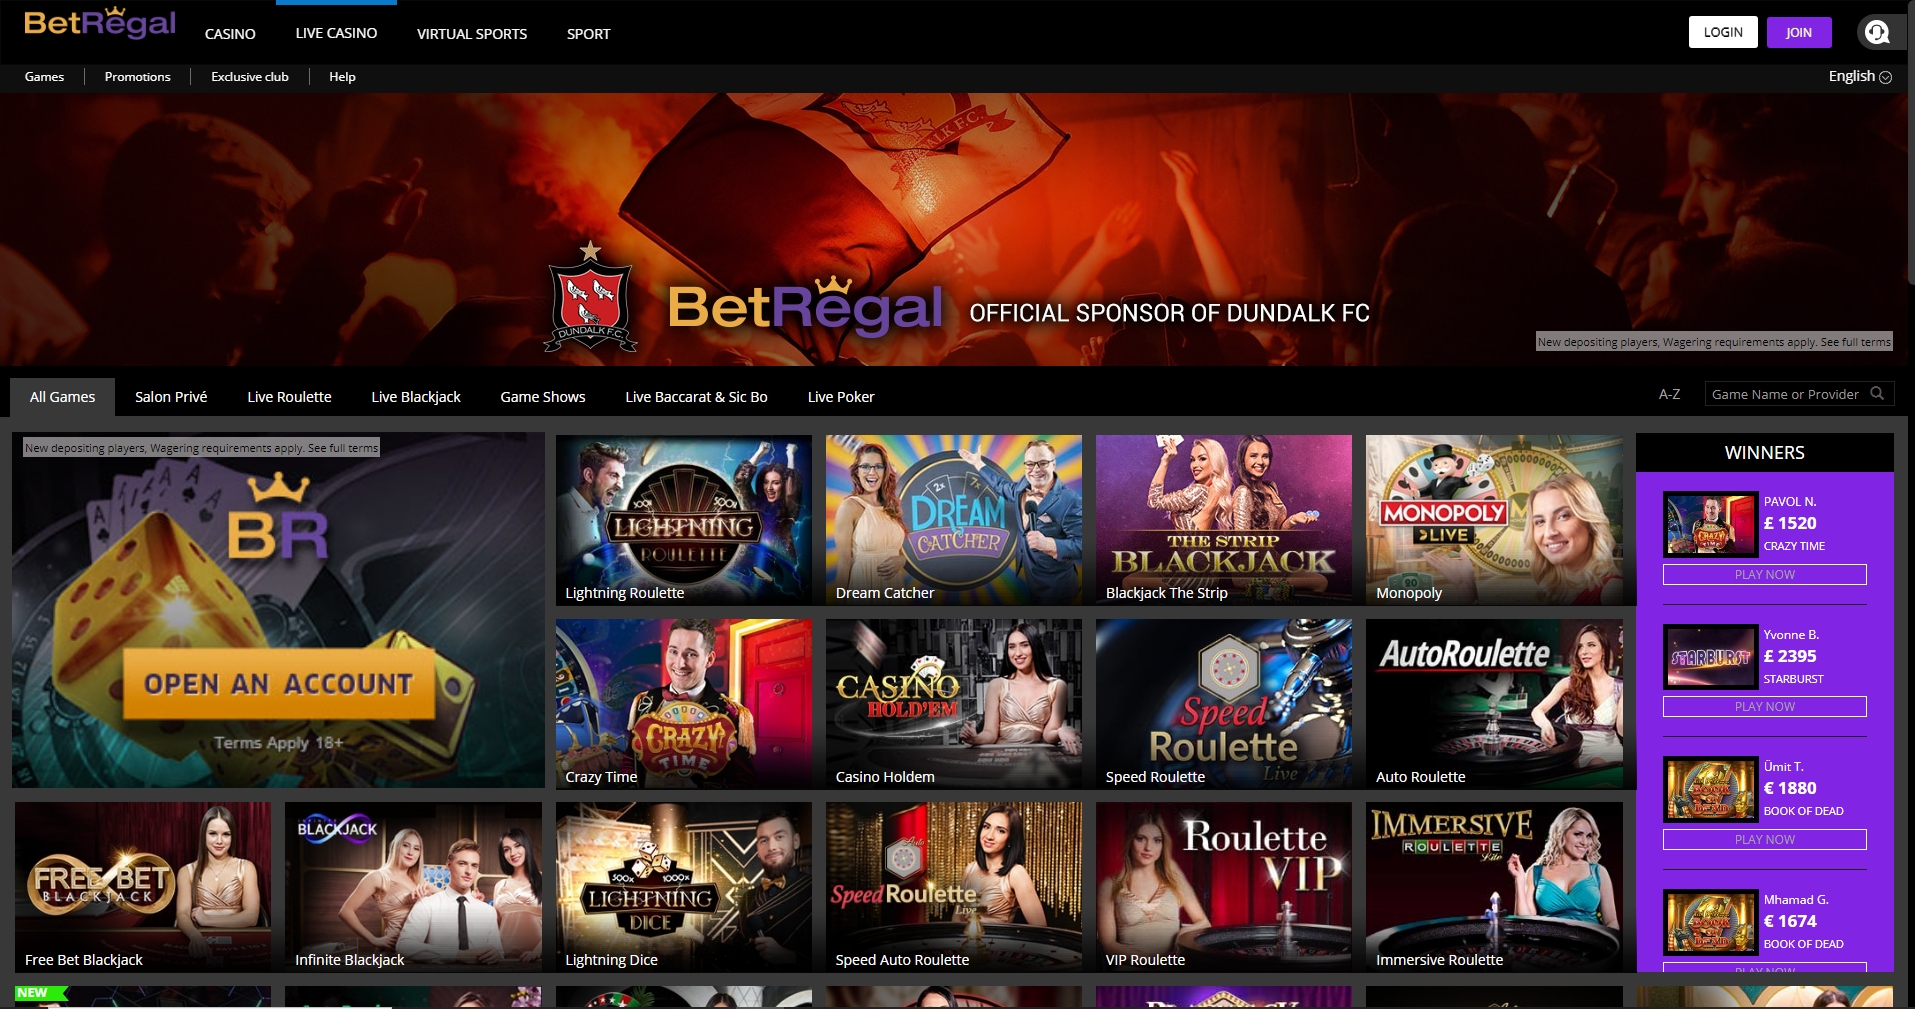 Betregal Casino Live Dealer Games